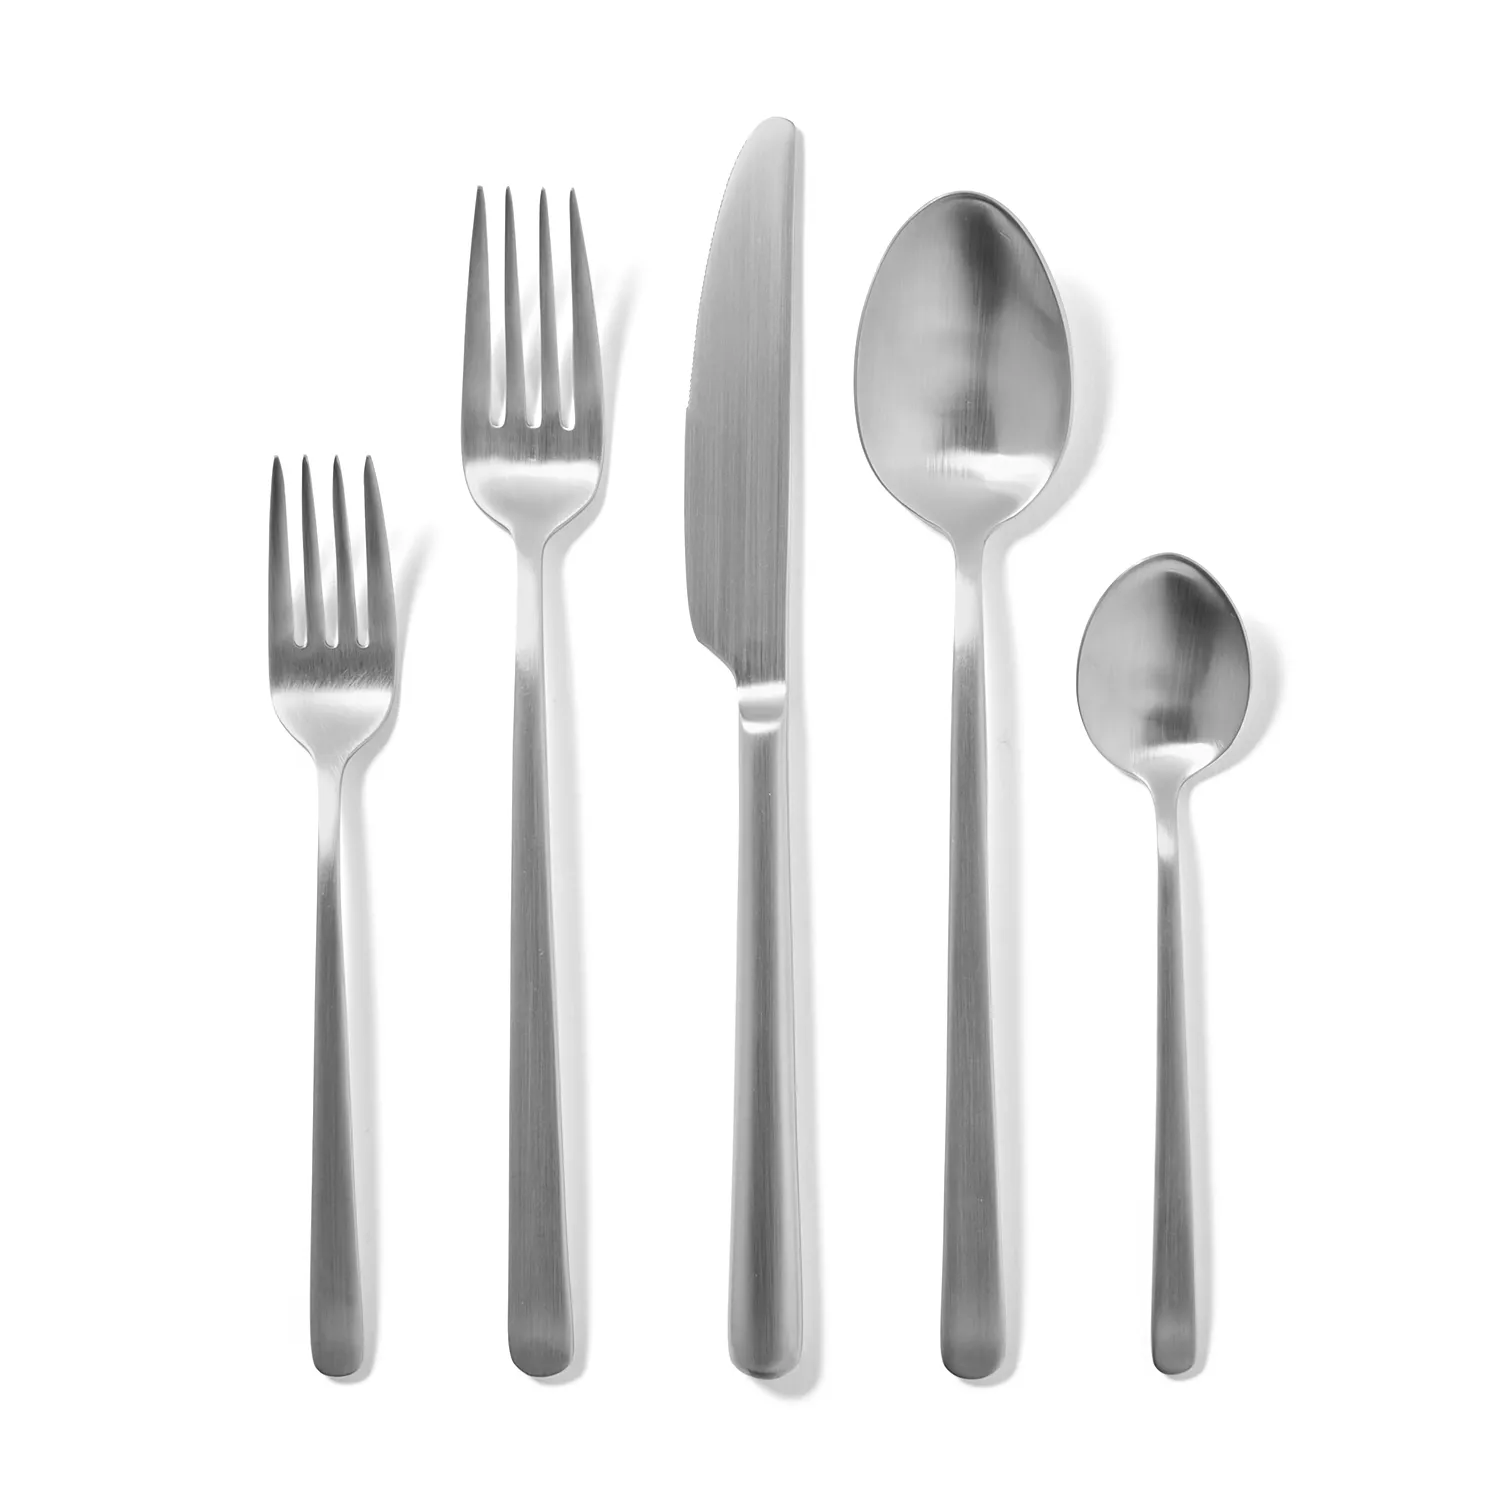 O.C.E. Matte Black Silverware Set, Stainless Steel Flatware Set, 20-Piece Tableware Cutlery Set Service for 4, Satin Finish Tableware Utensils Set